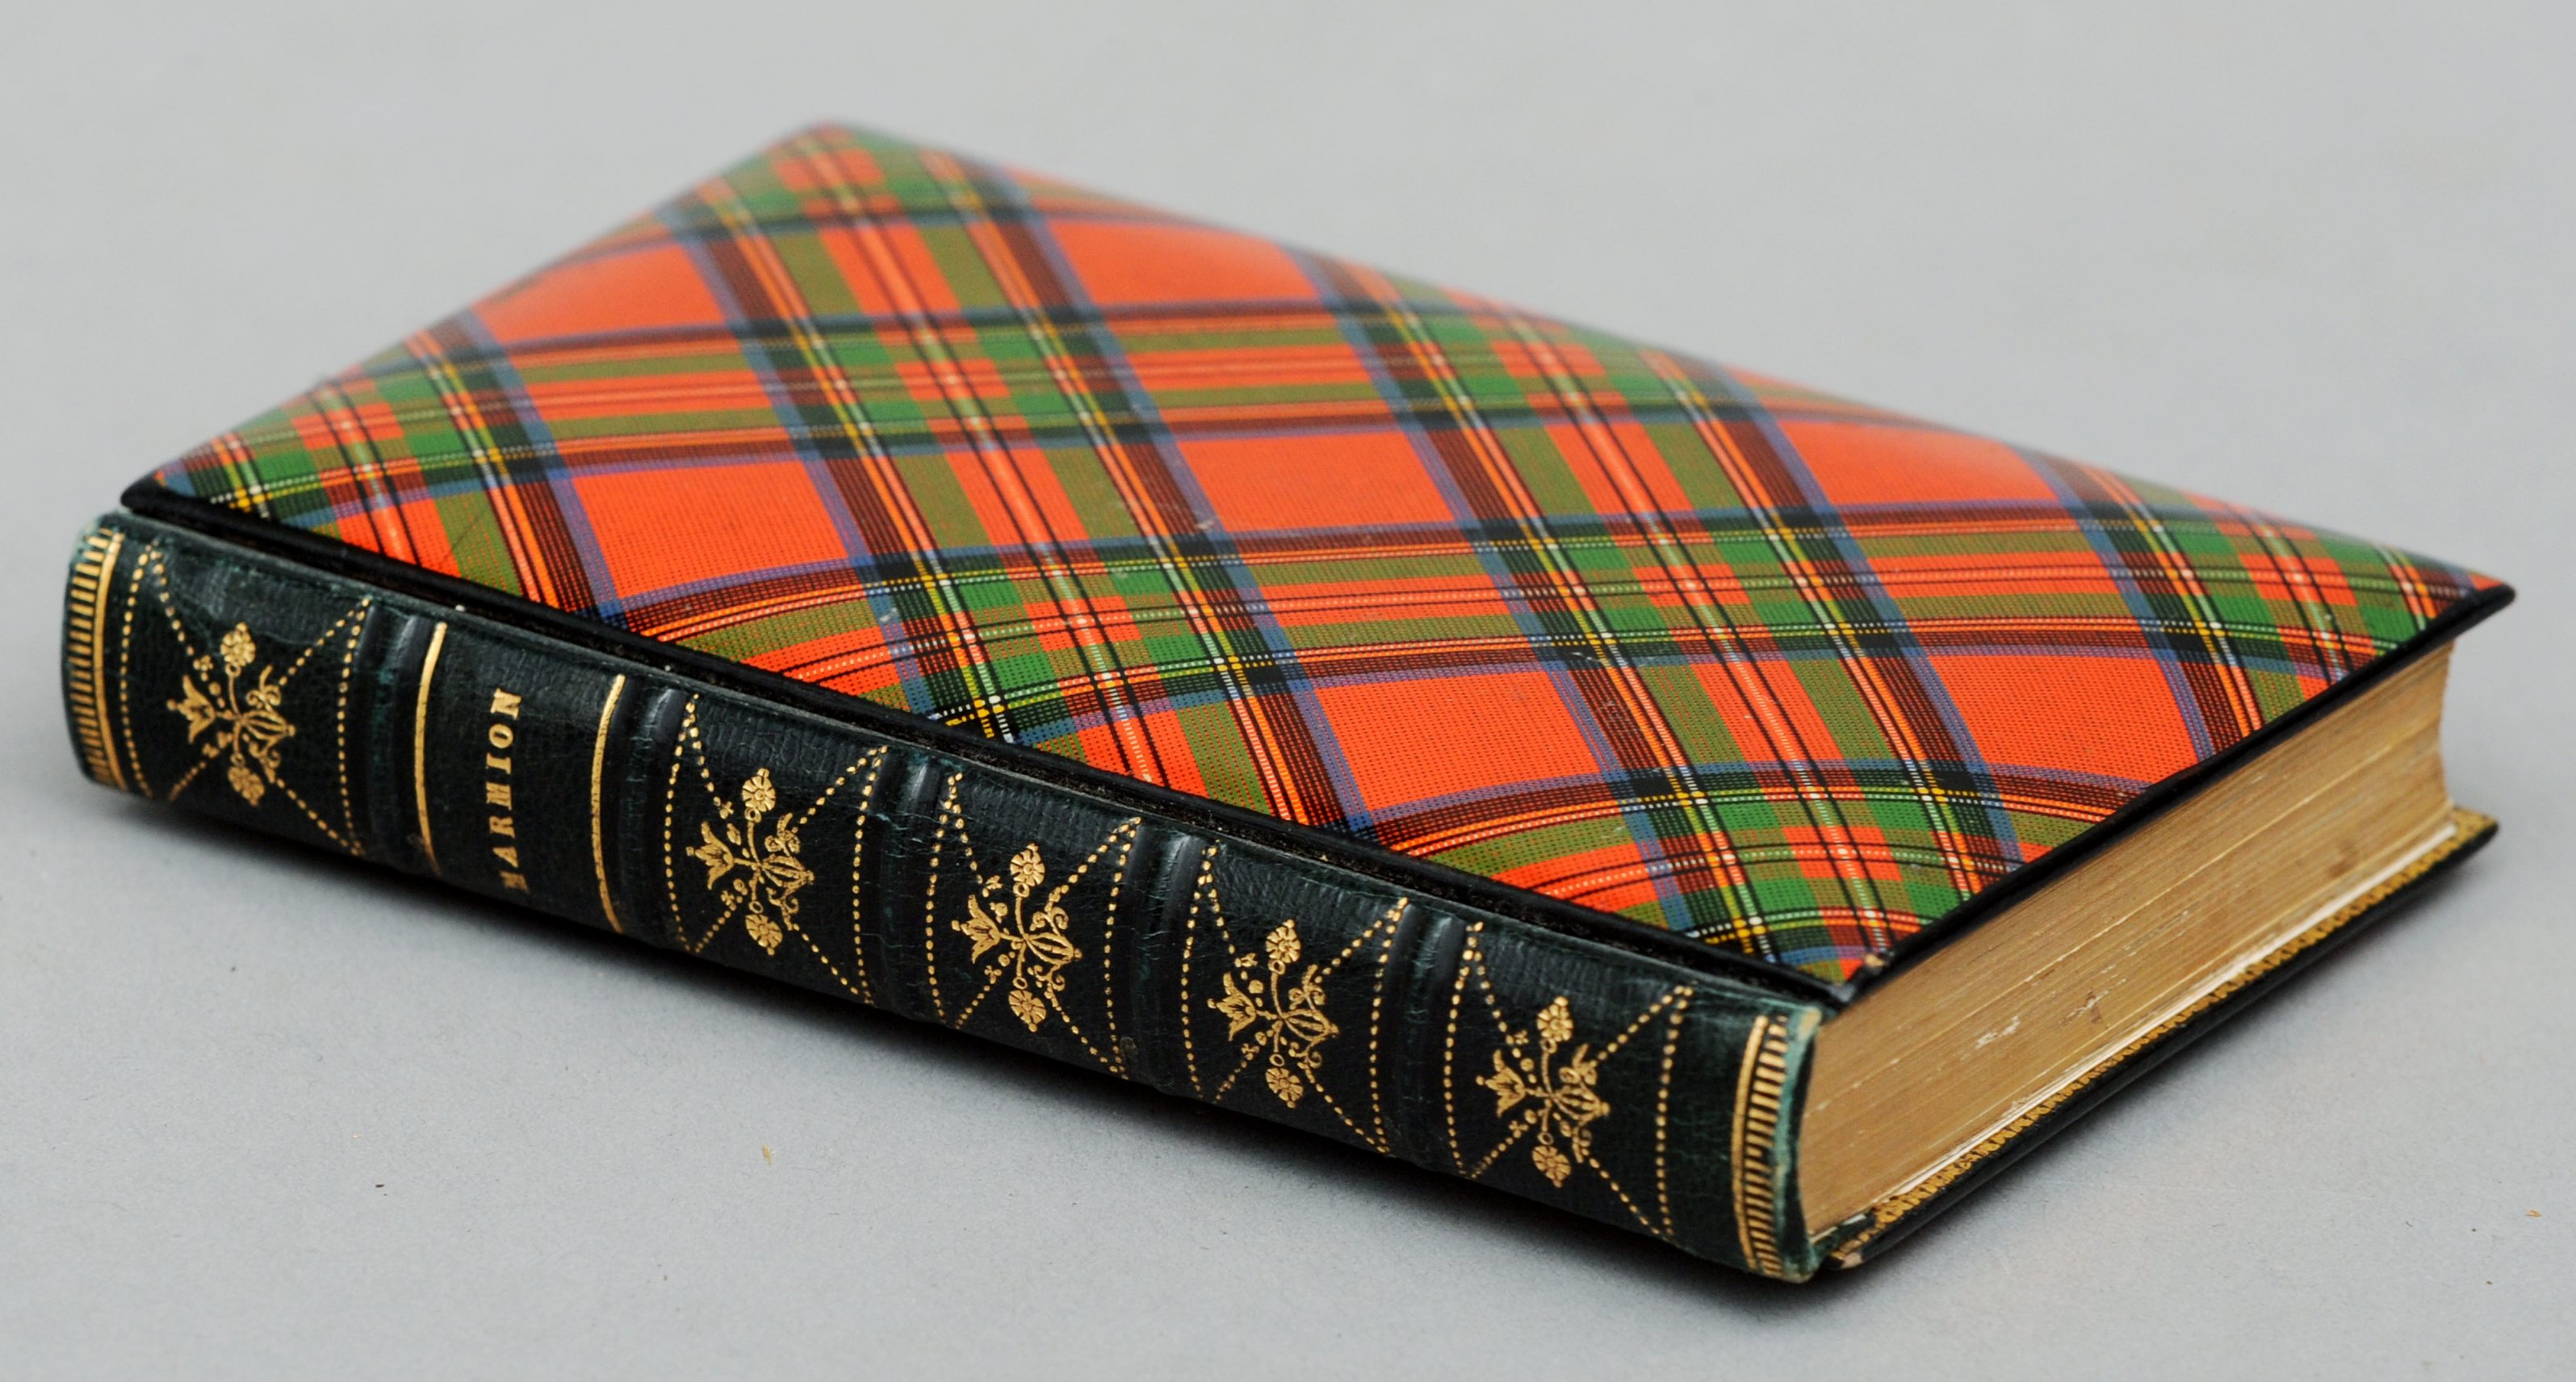 A 19th century tartan ware book cover In the Stuart tartan, the book Marmion by Sir Walter Scott,